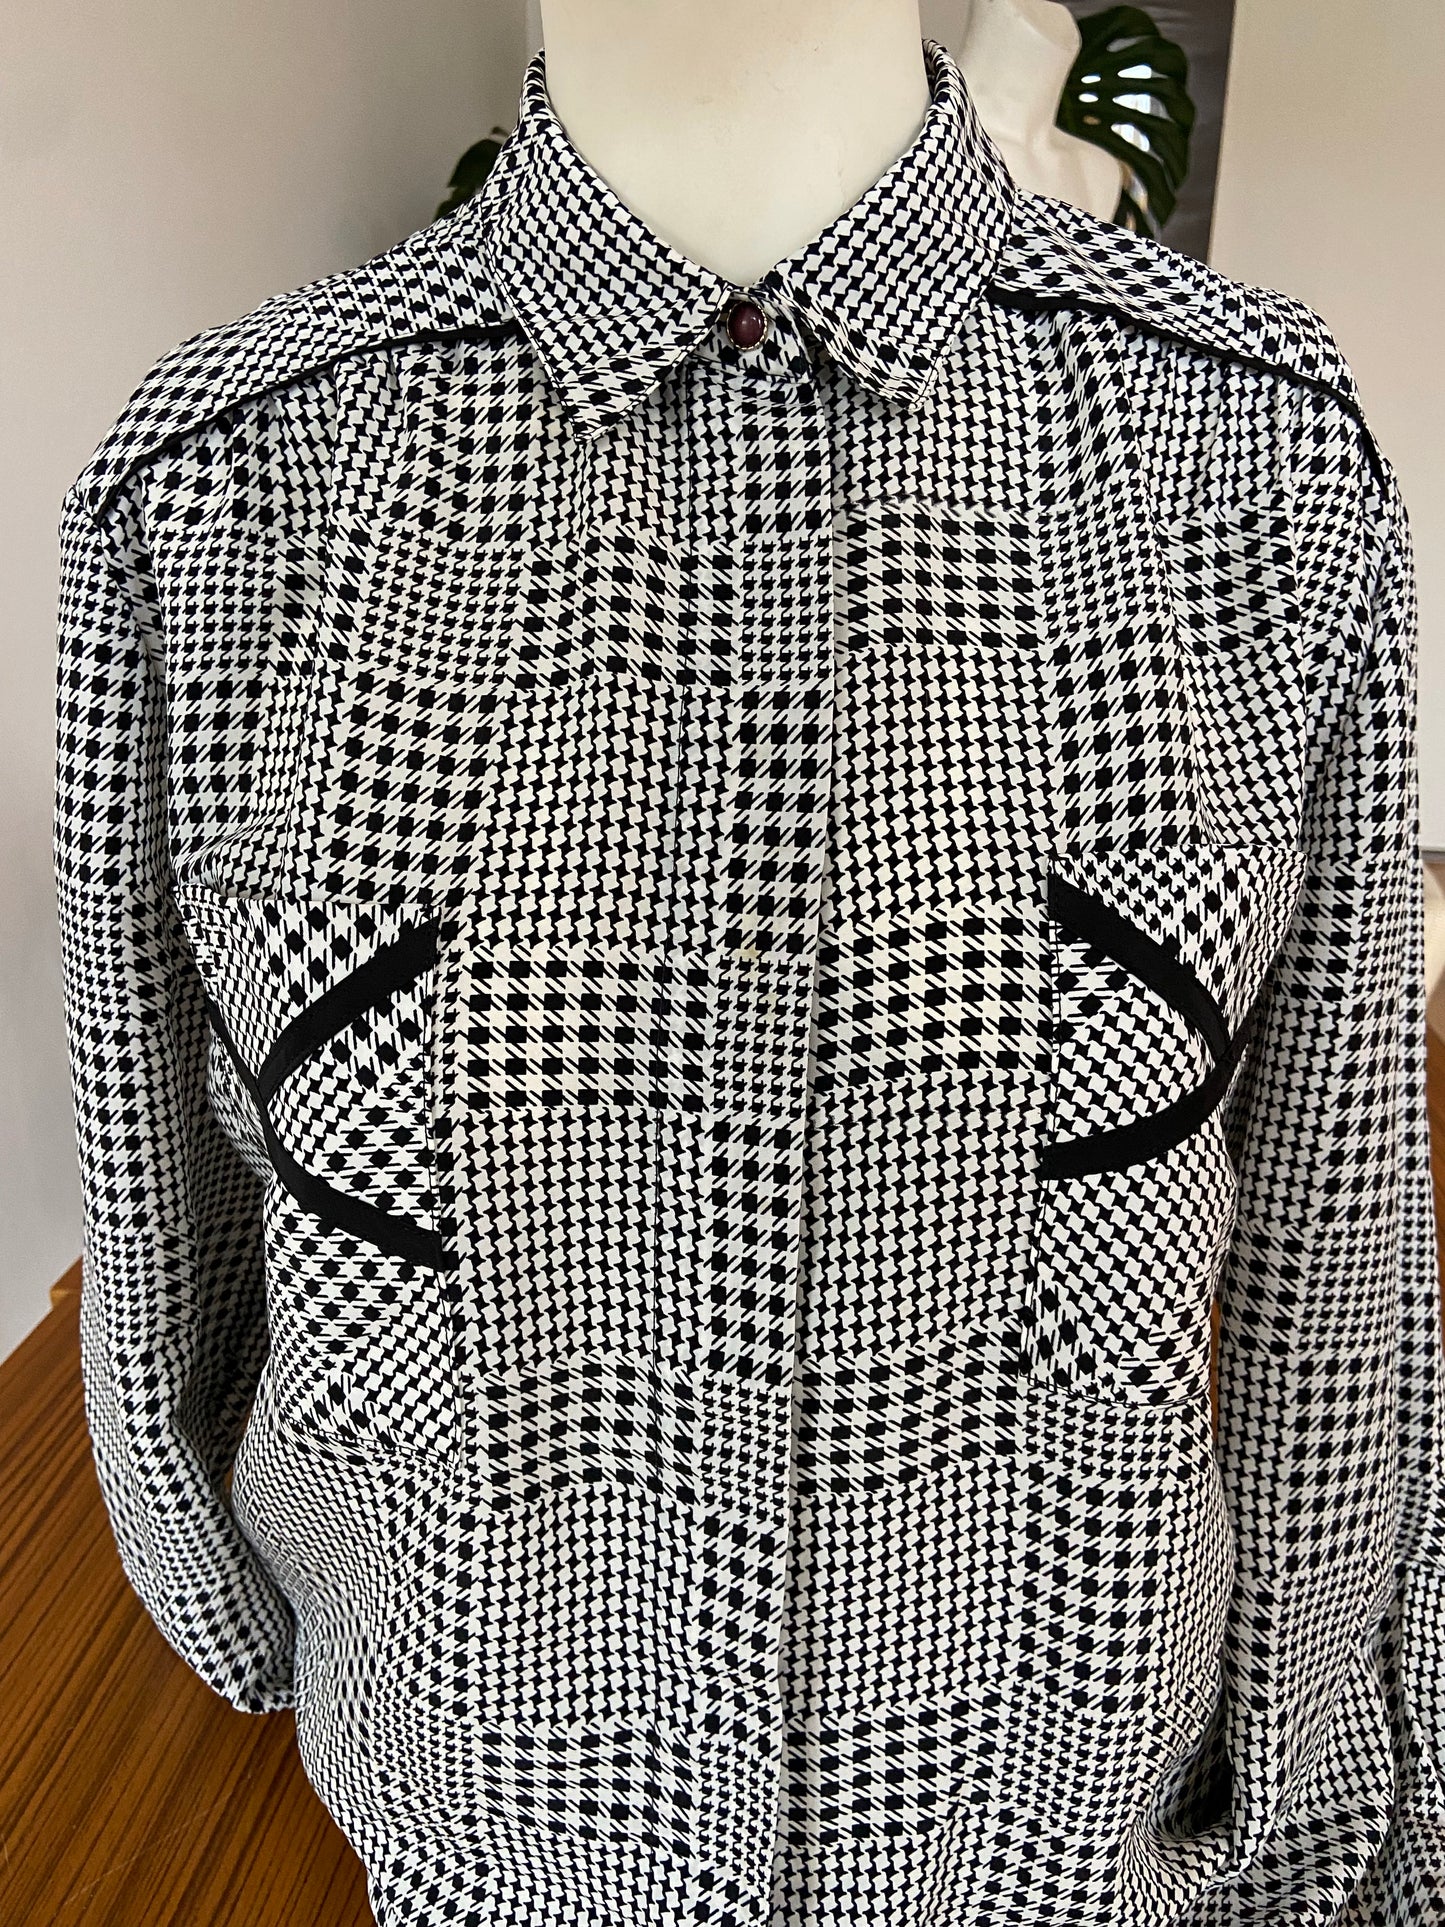 Houndstooth checkered shirt